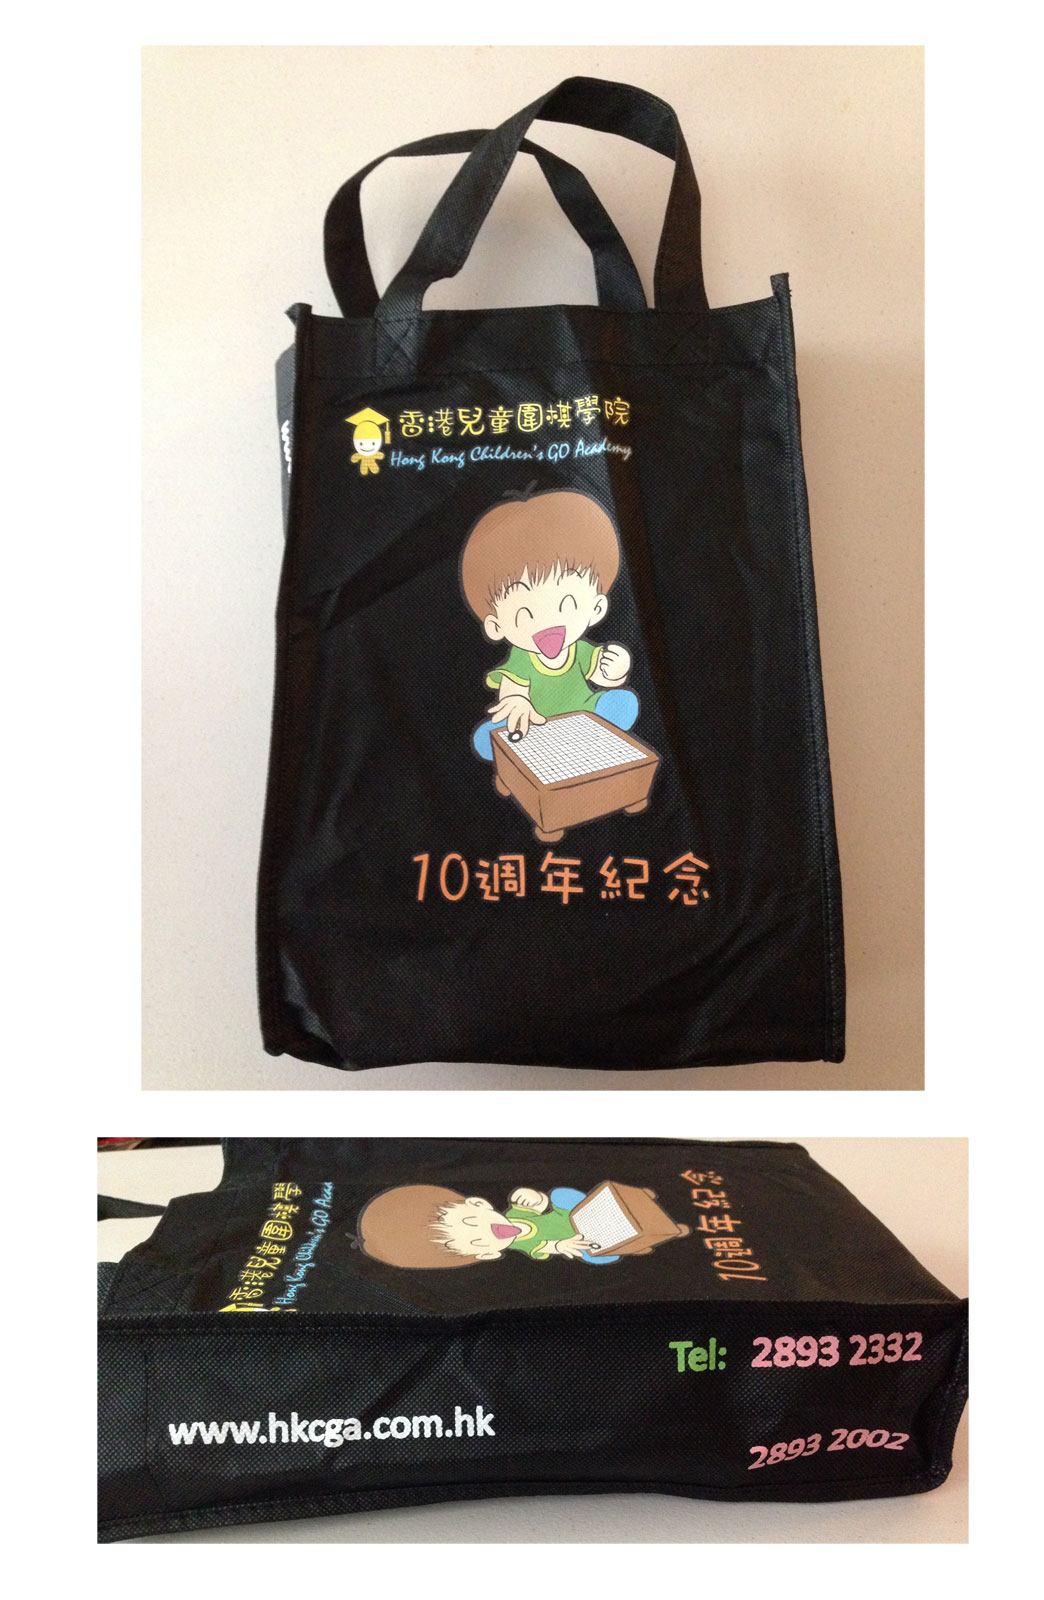 Hong Kong Go Association reusable bag (other side)